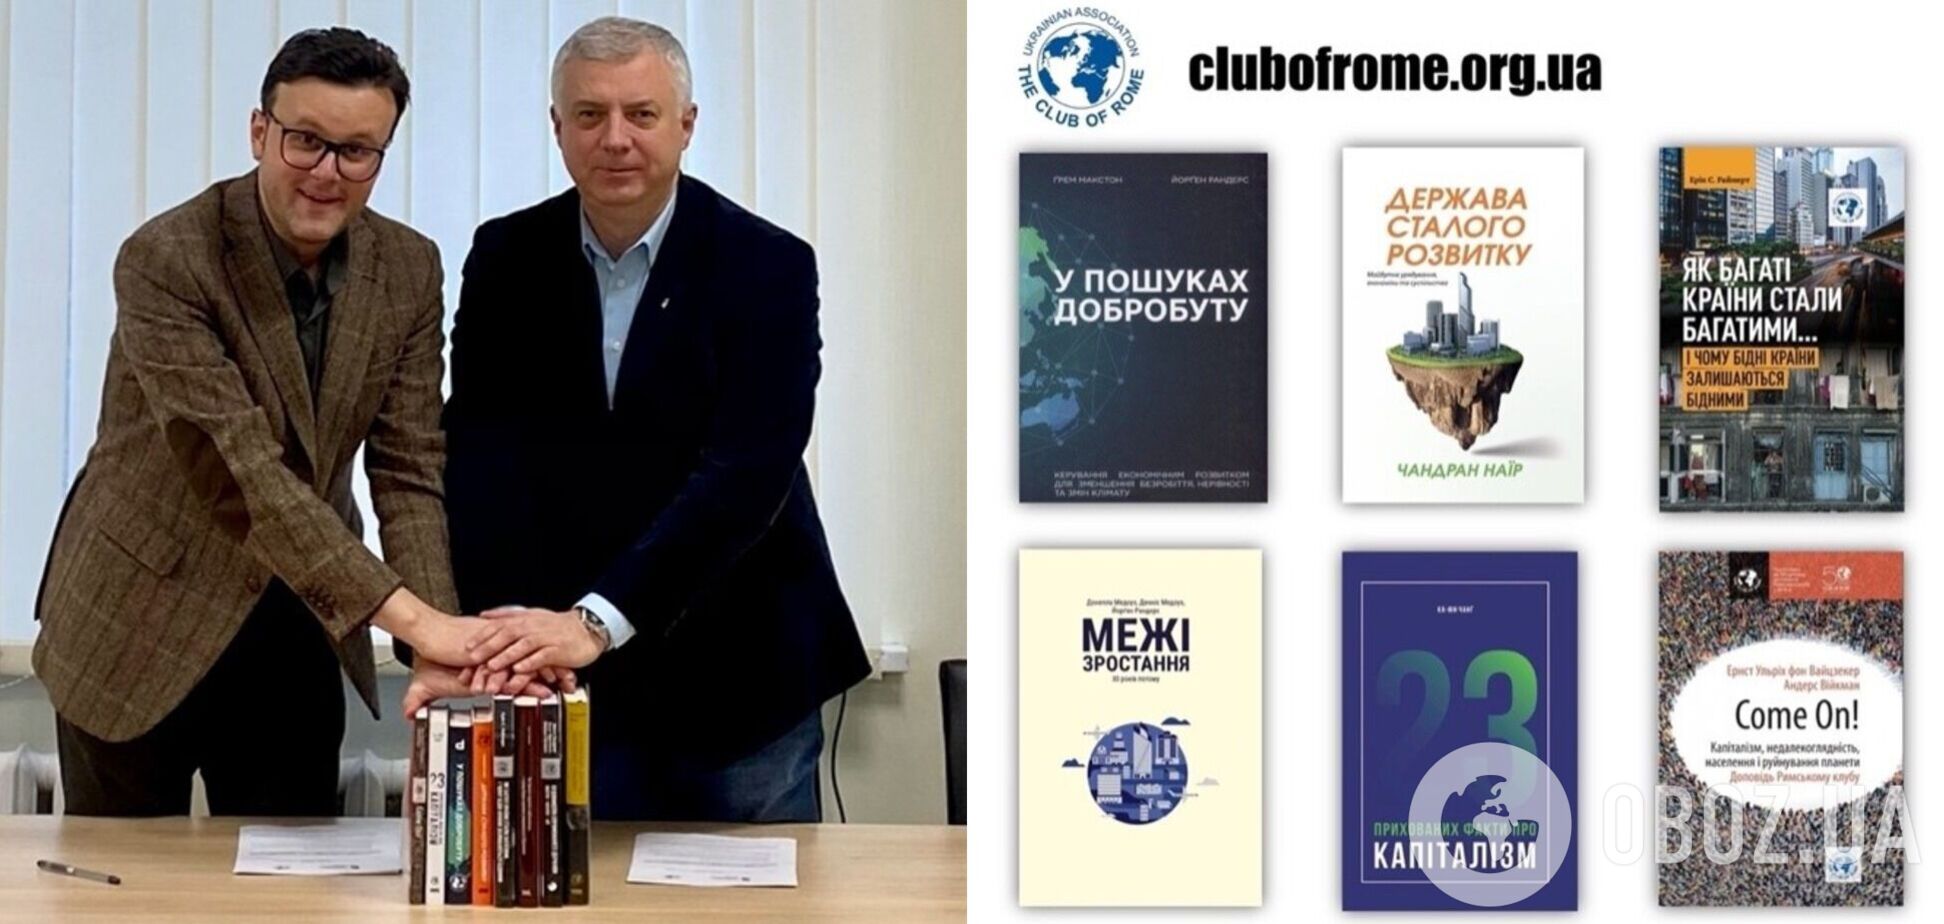 Украинская ассоциация Римского клуба дарит книги университетам при содействии НАОКВО